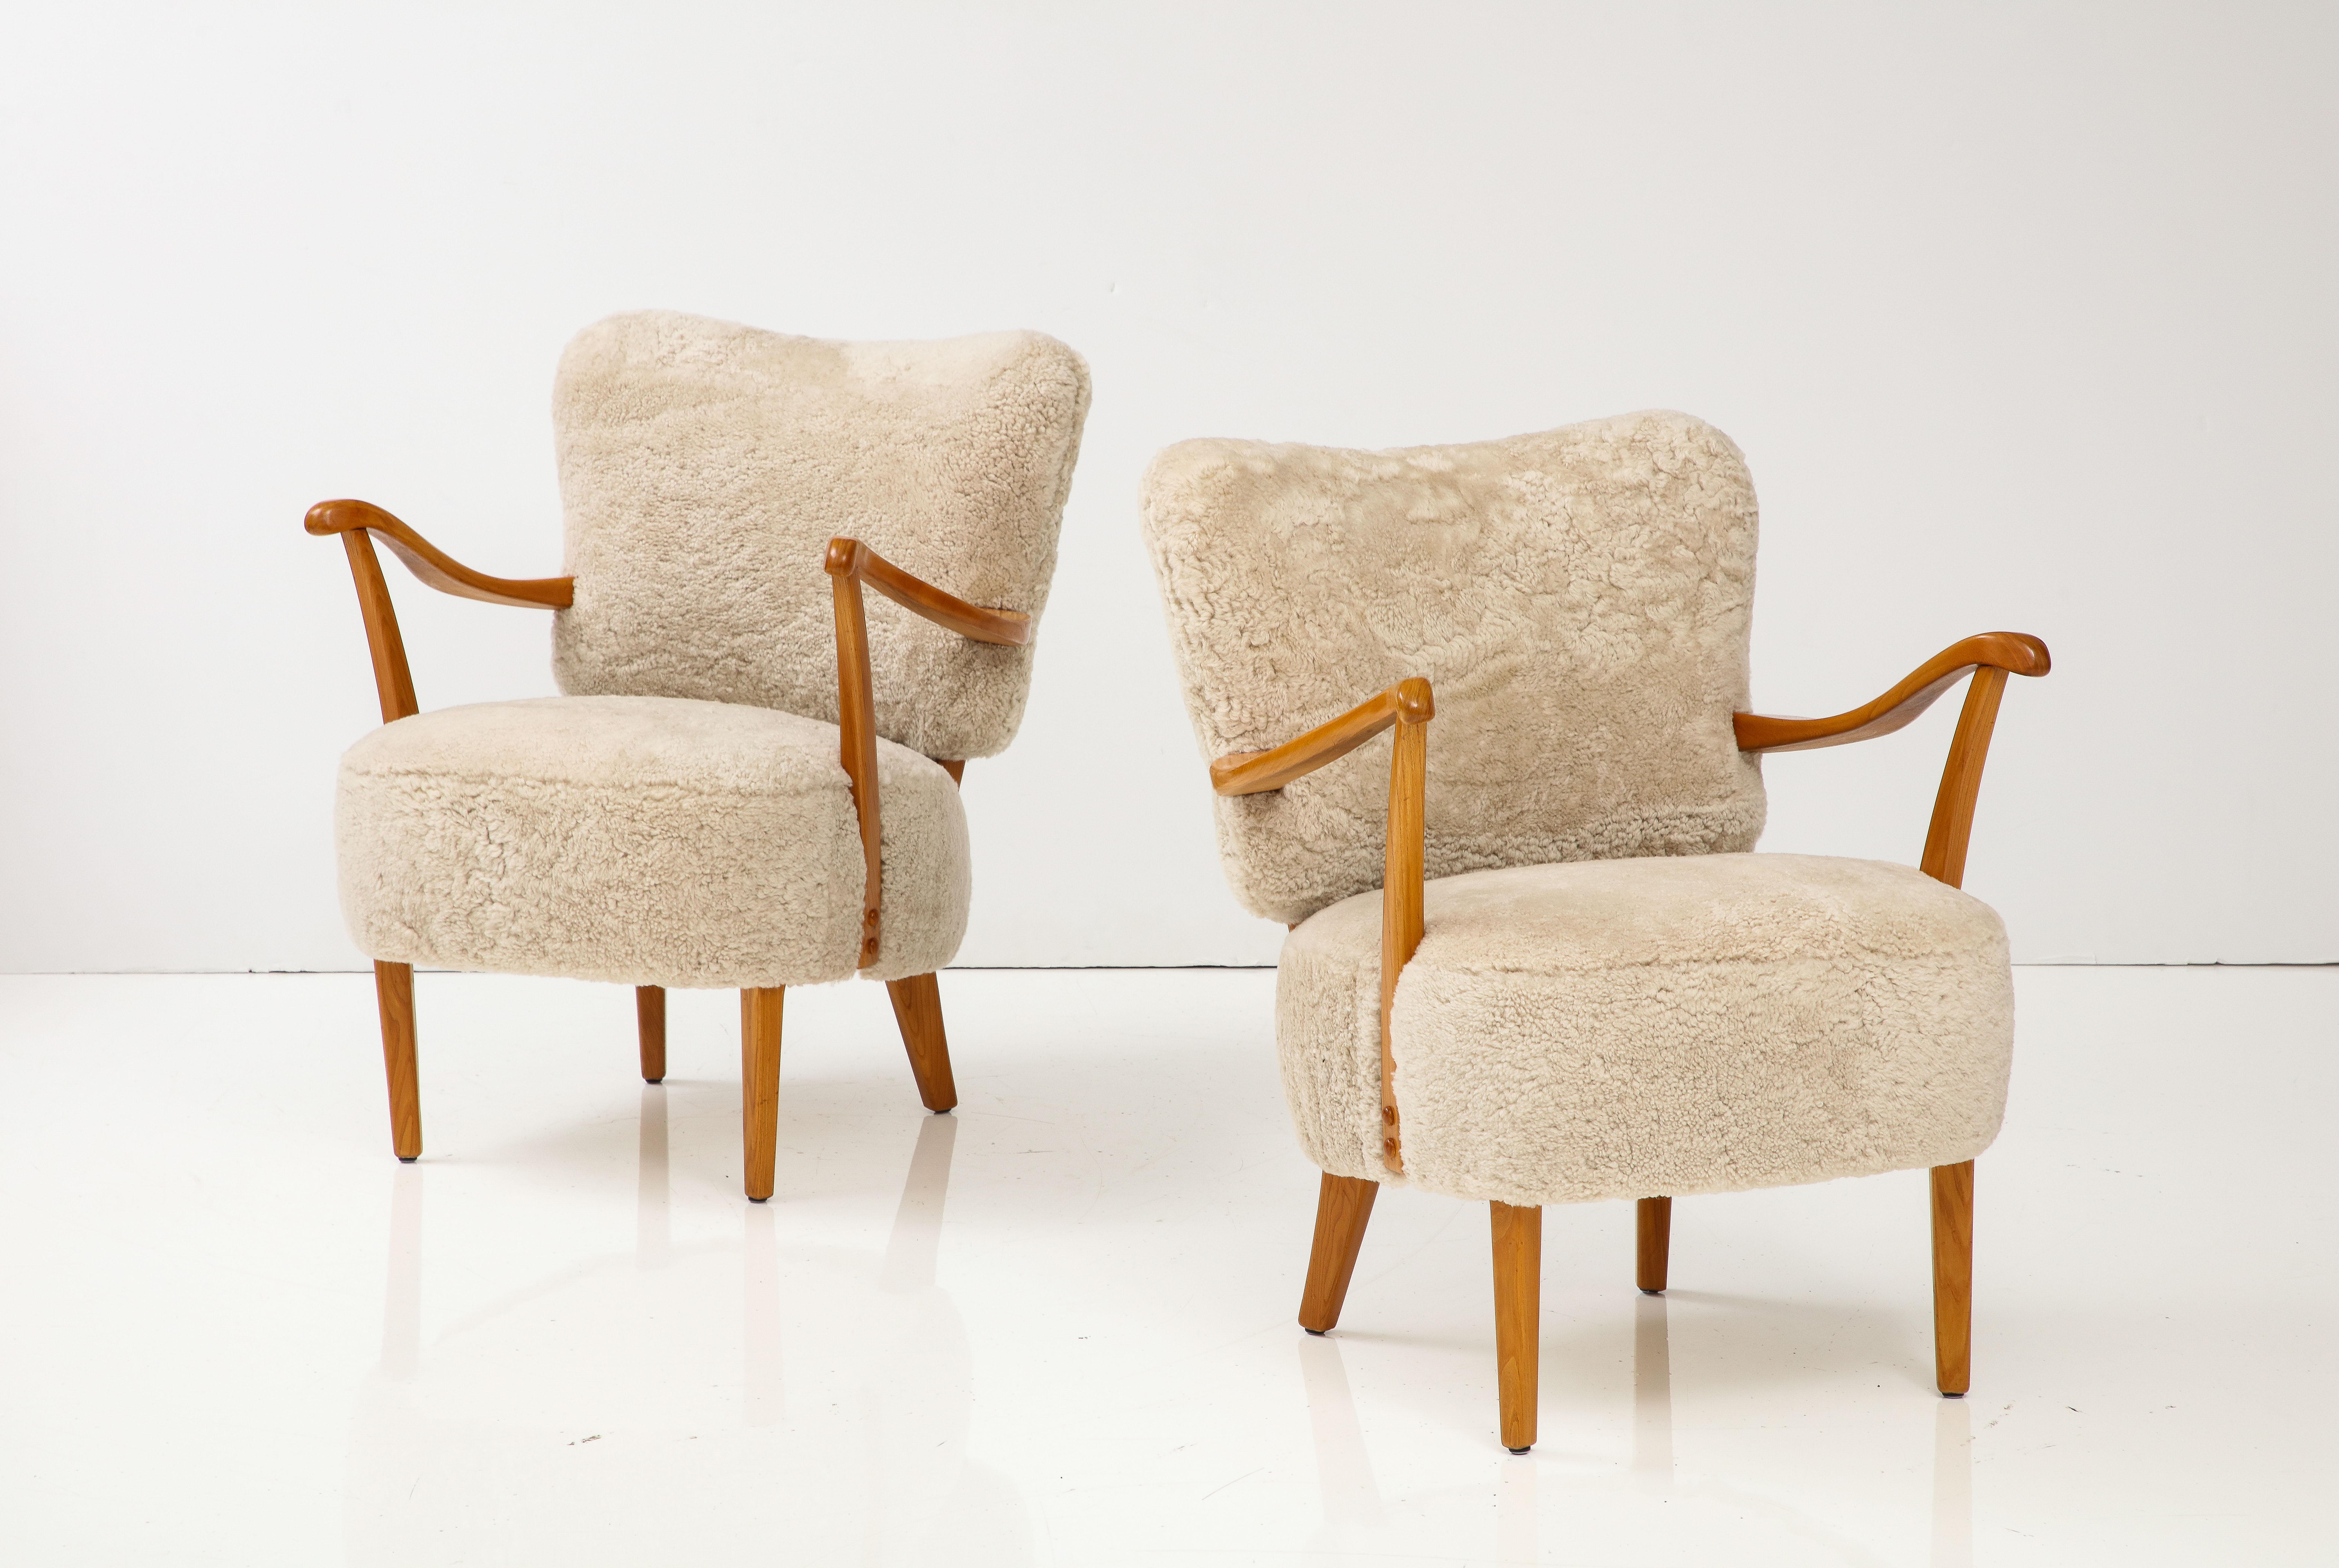 A Pair of Swedish Modern Sheepskin Upholstered Armchairs, Circa 1940-50 2